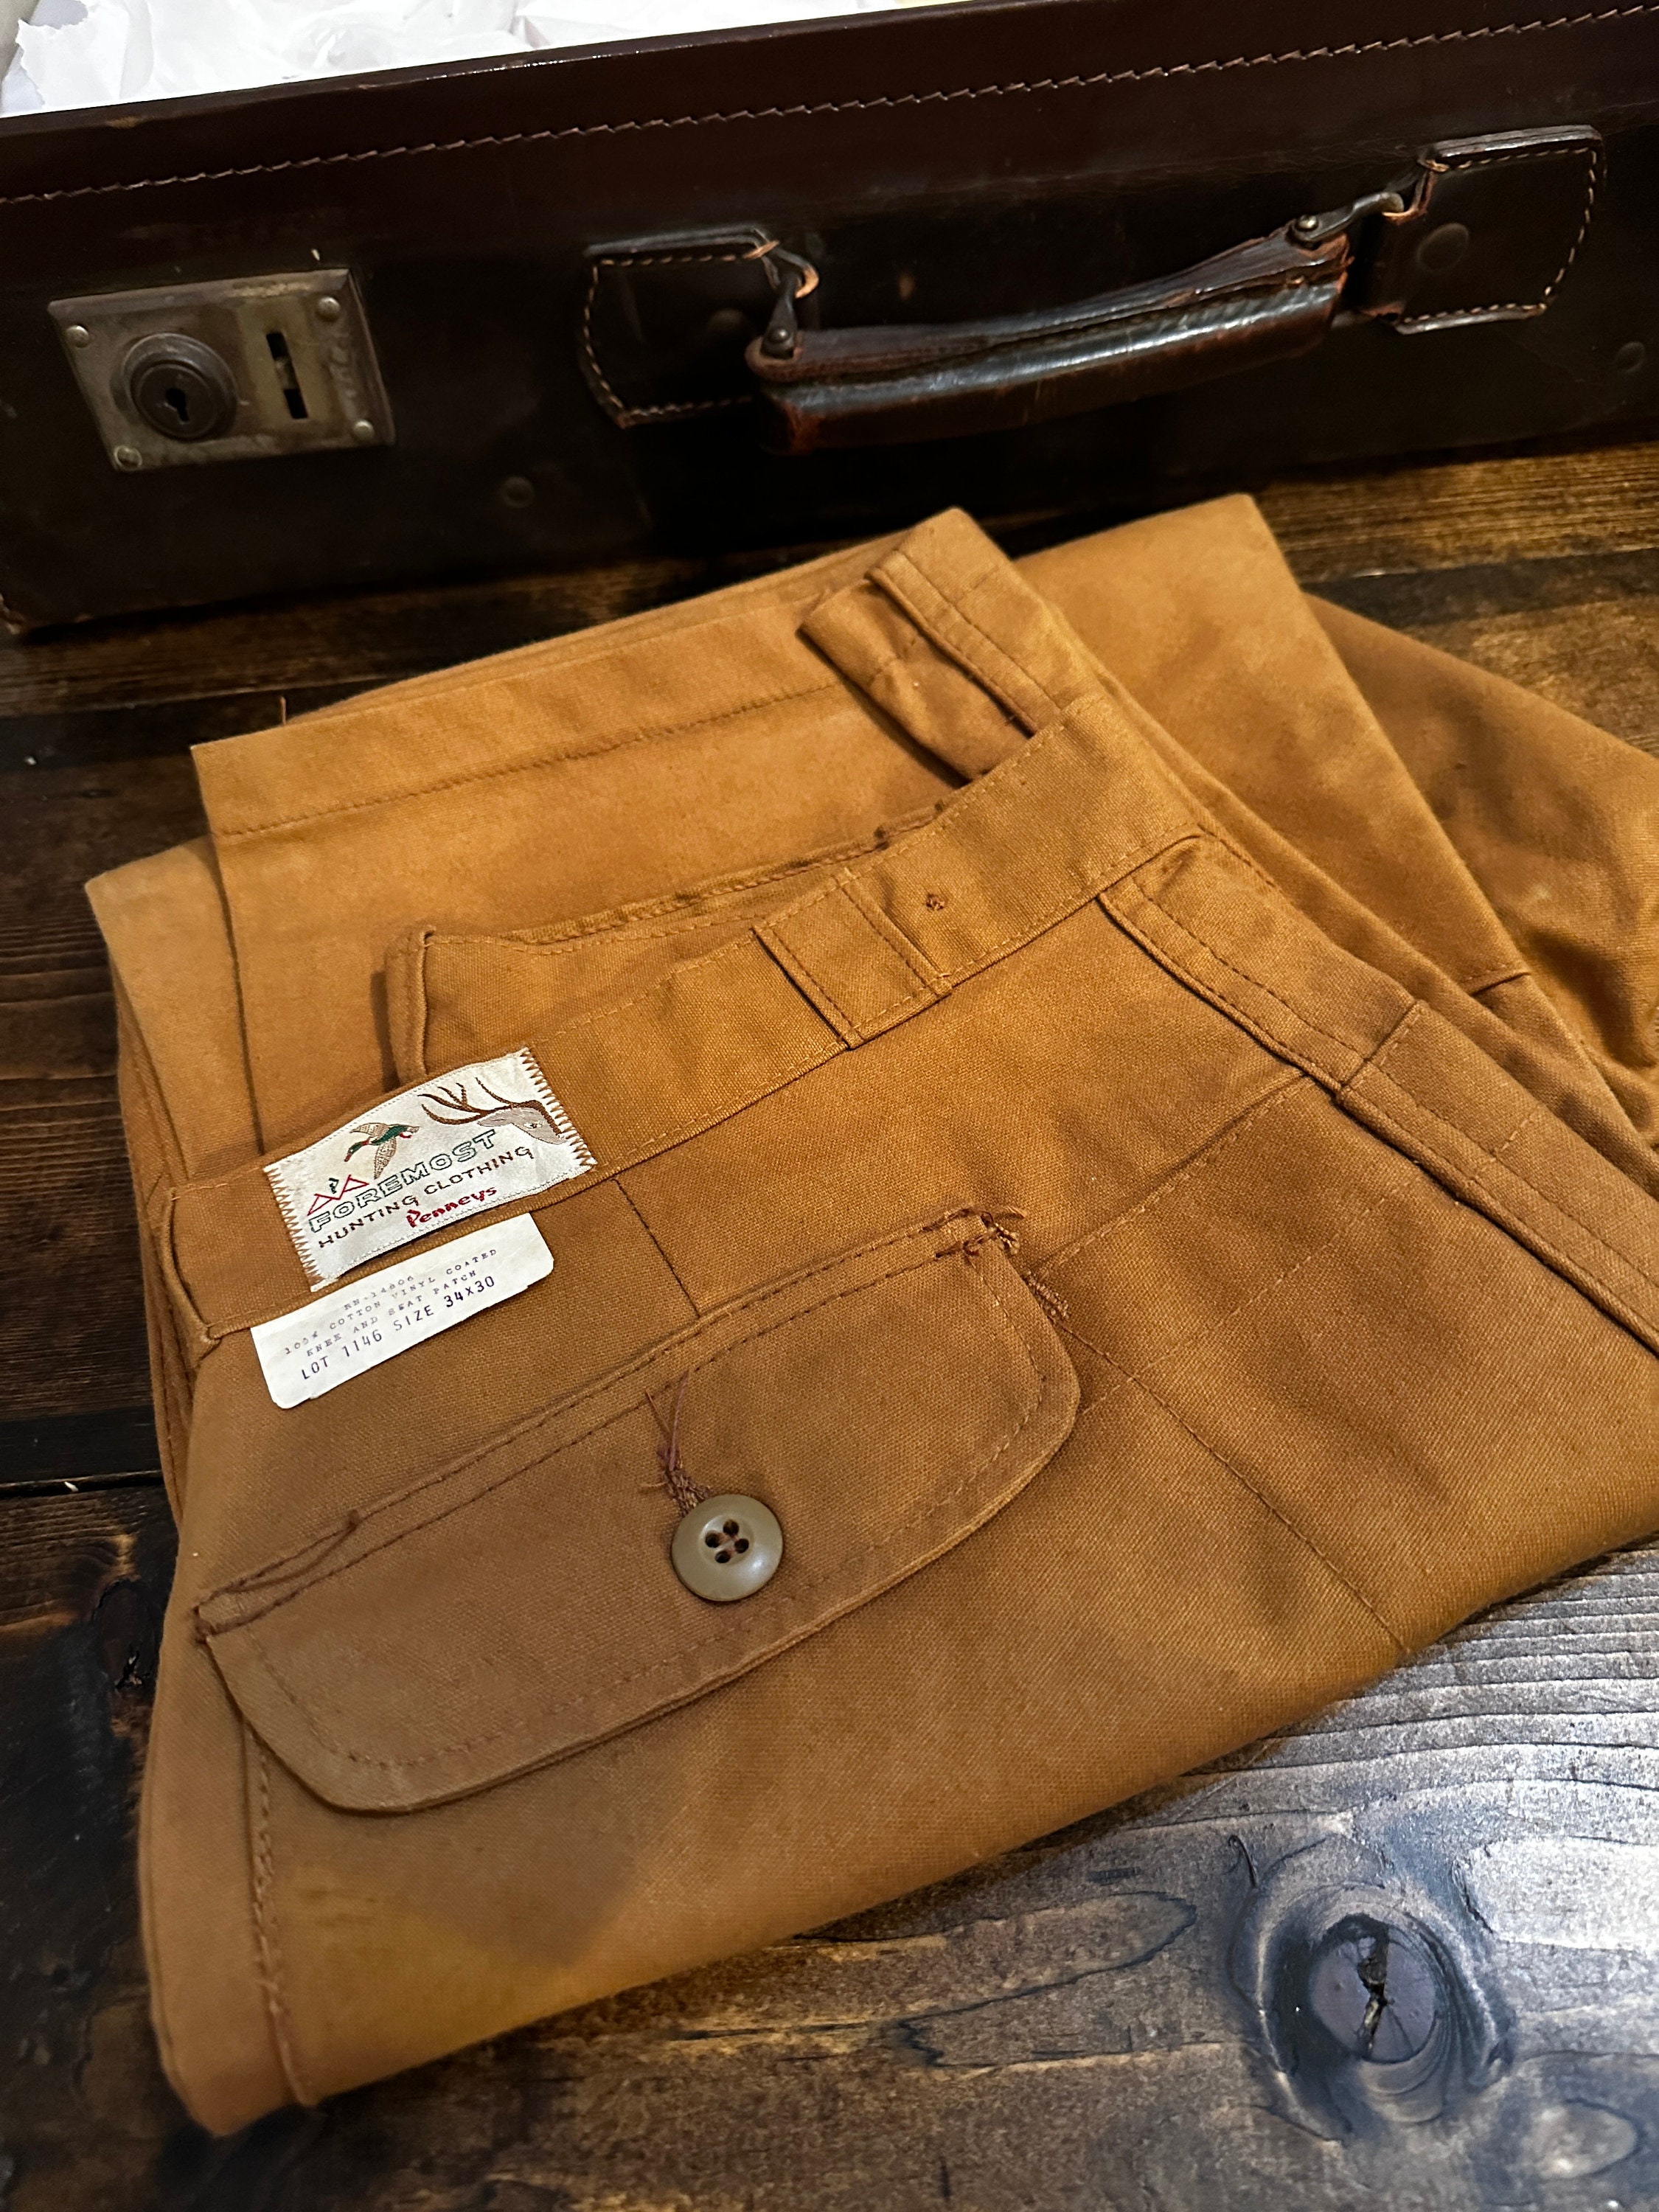 1950s Foremost JC Penney Blue Denim Capri Pants Shorts 